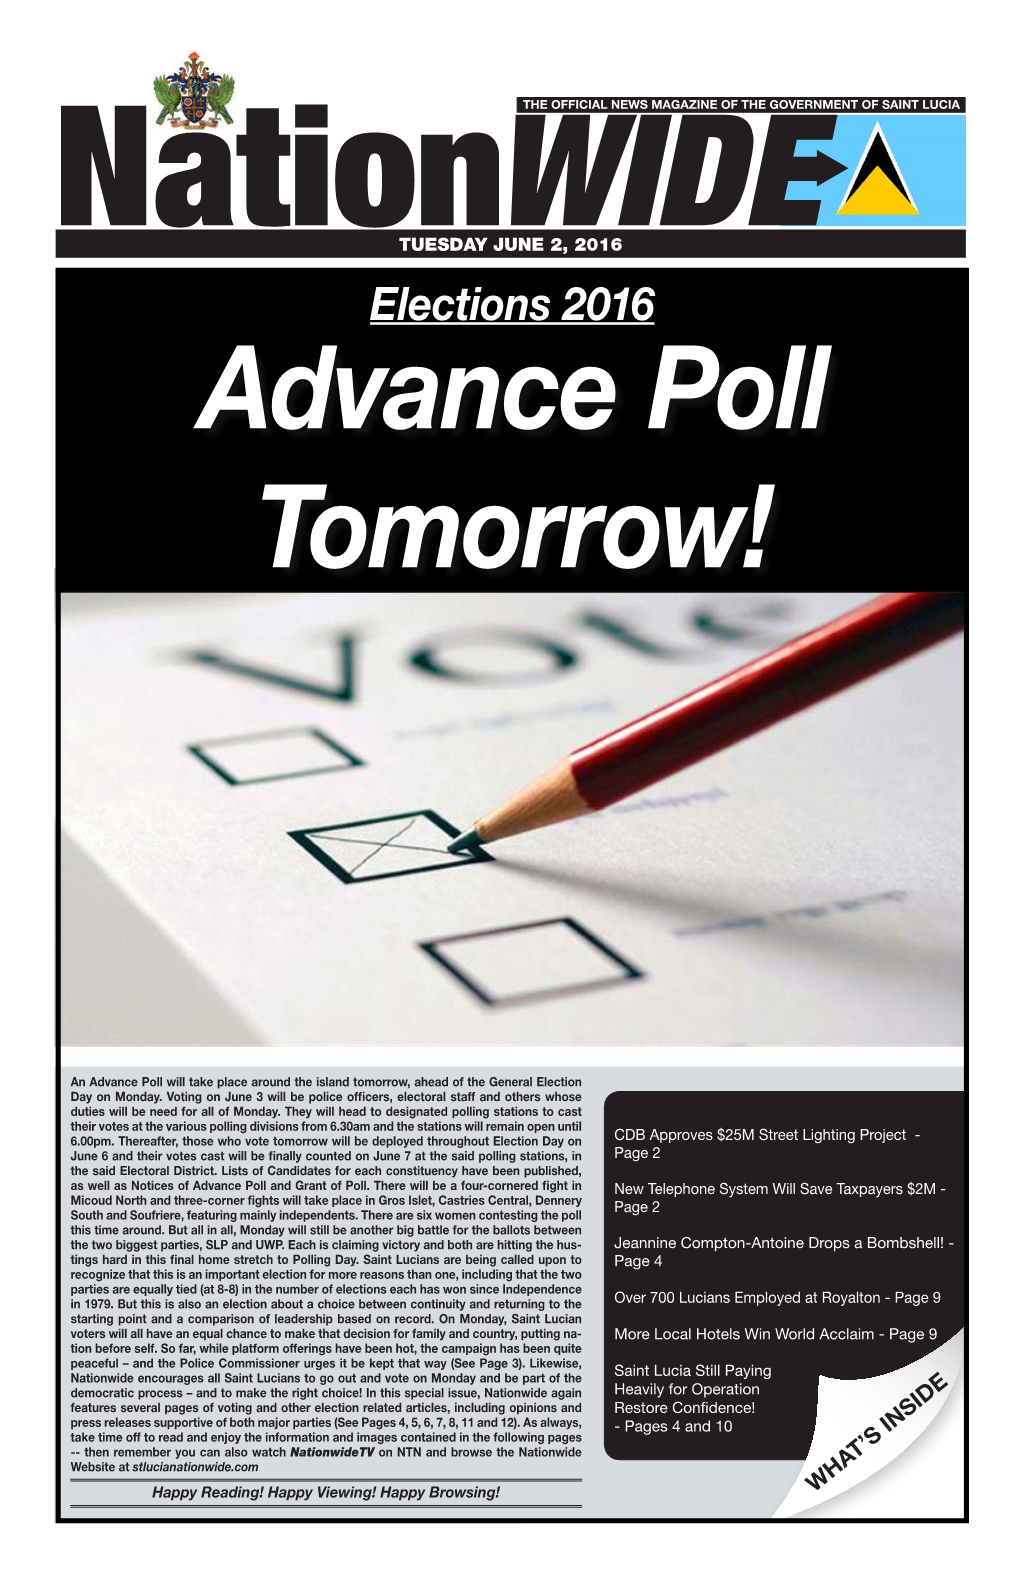 Elections 2016 Advance Poll Tomorrow!